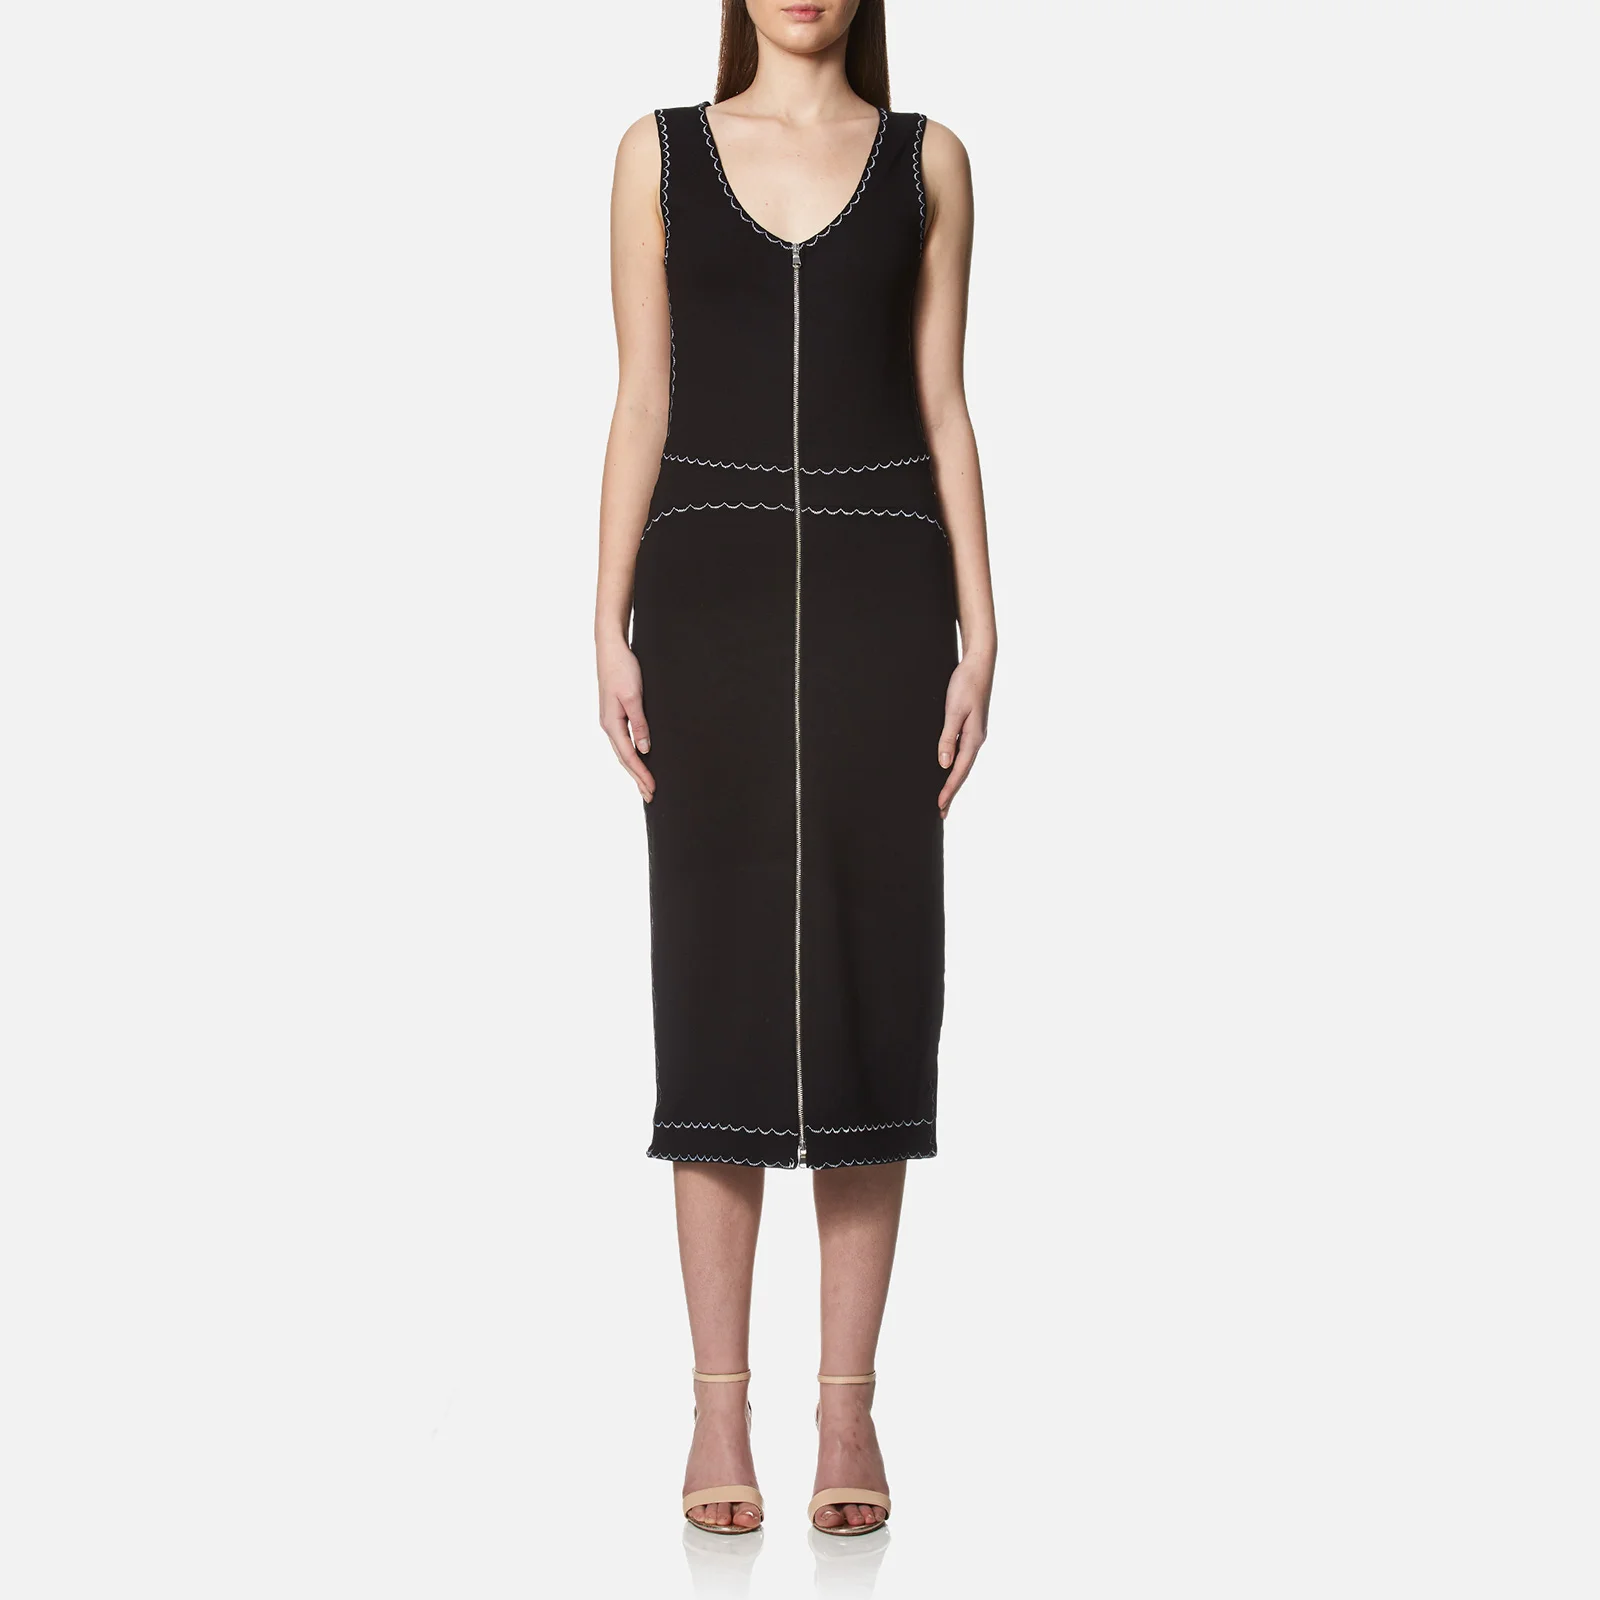 McQ Alexander McQueen Women's Contrast Tank Dress - Darkest Black Image 1